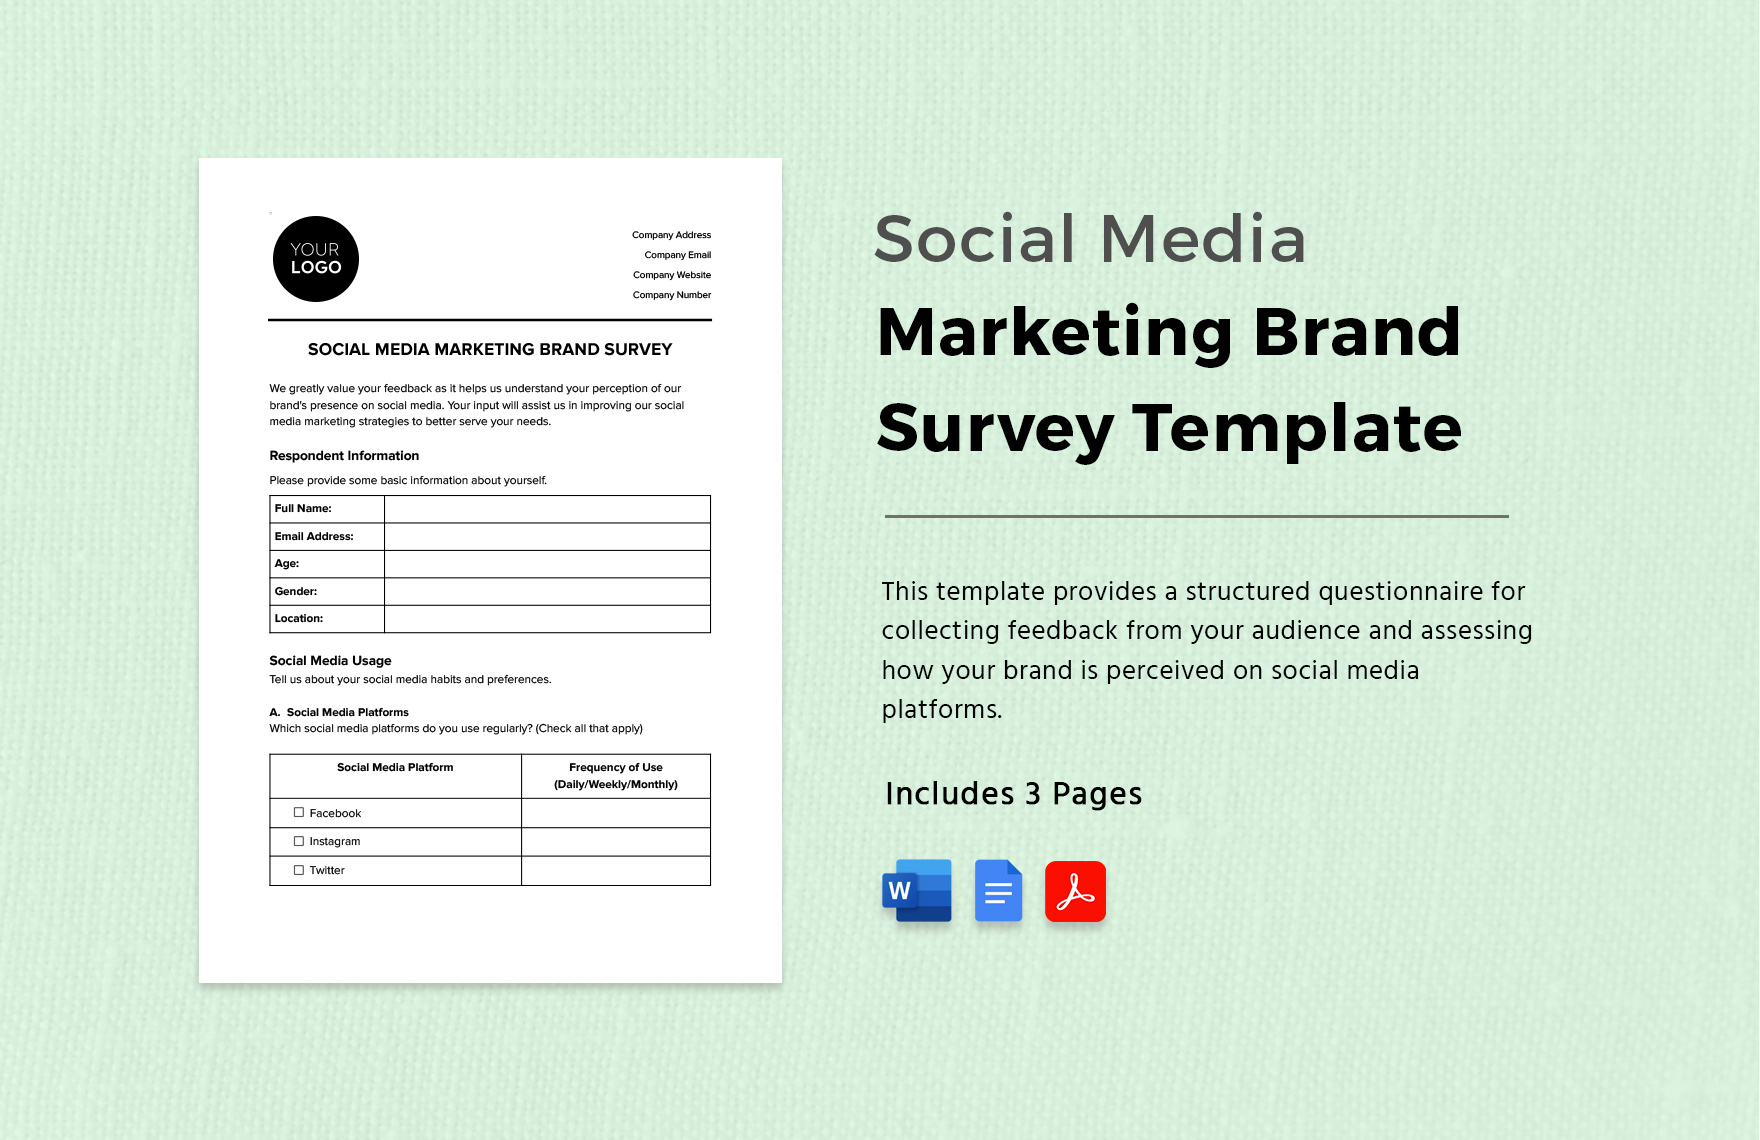 Social Media Marketing Brand Survey Template